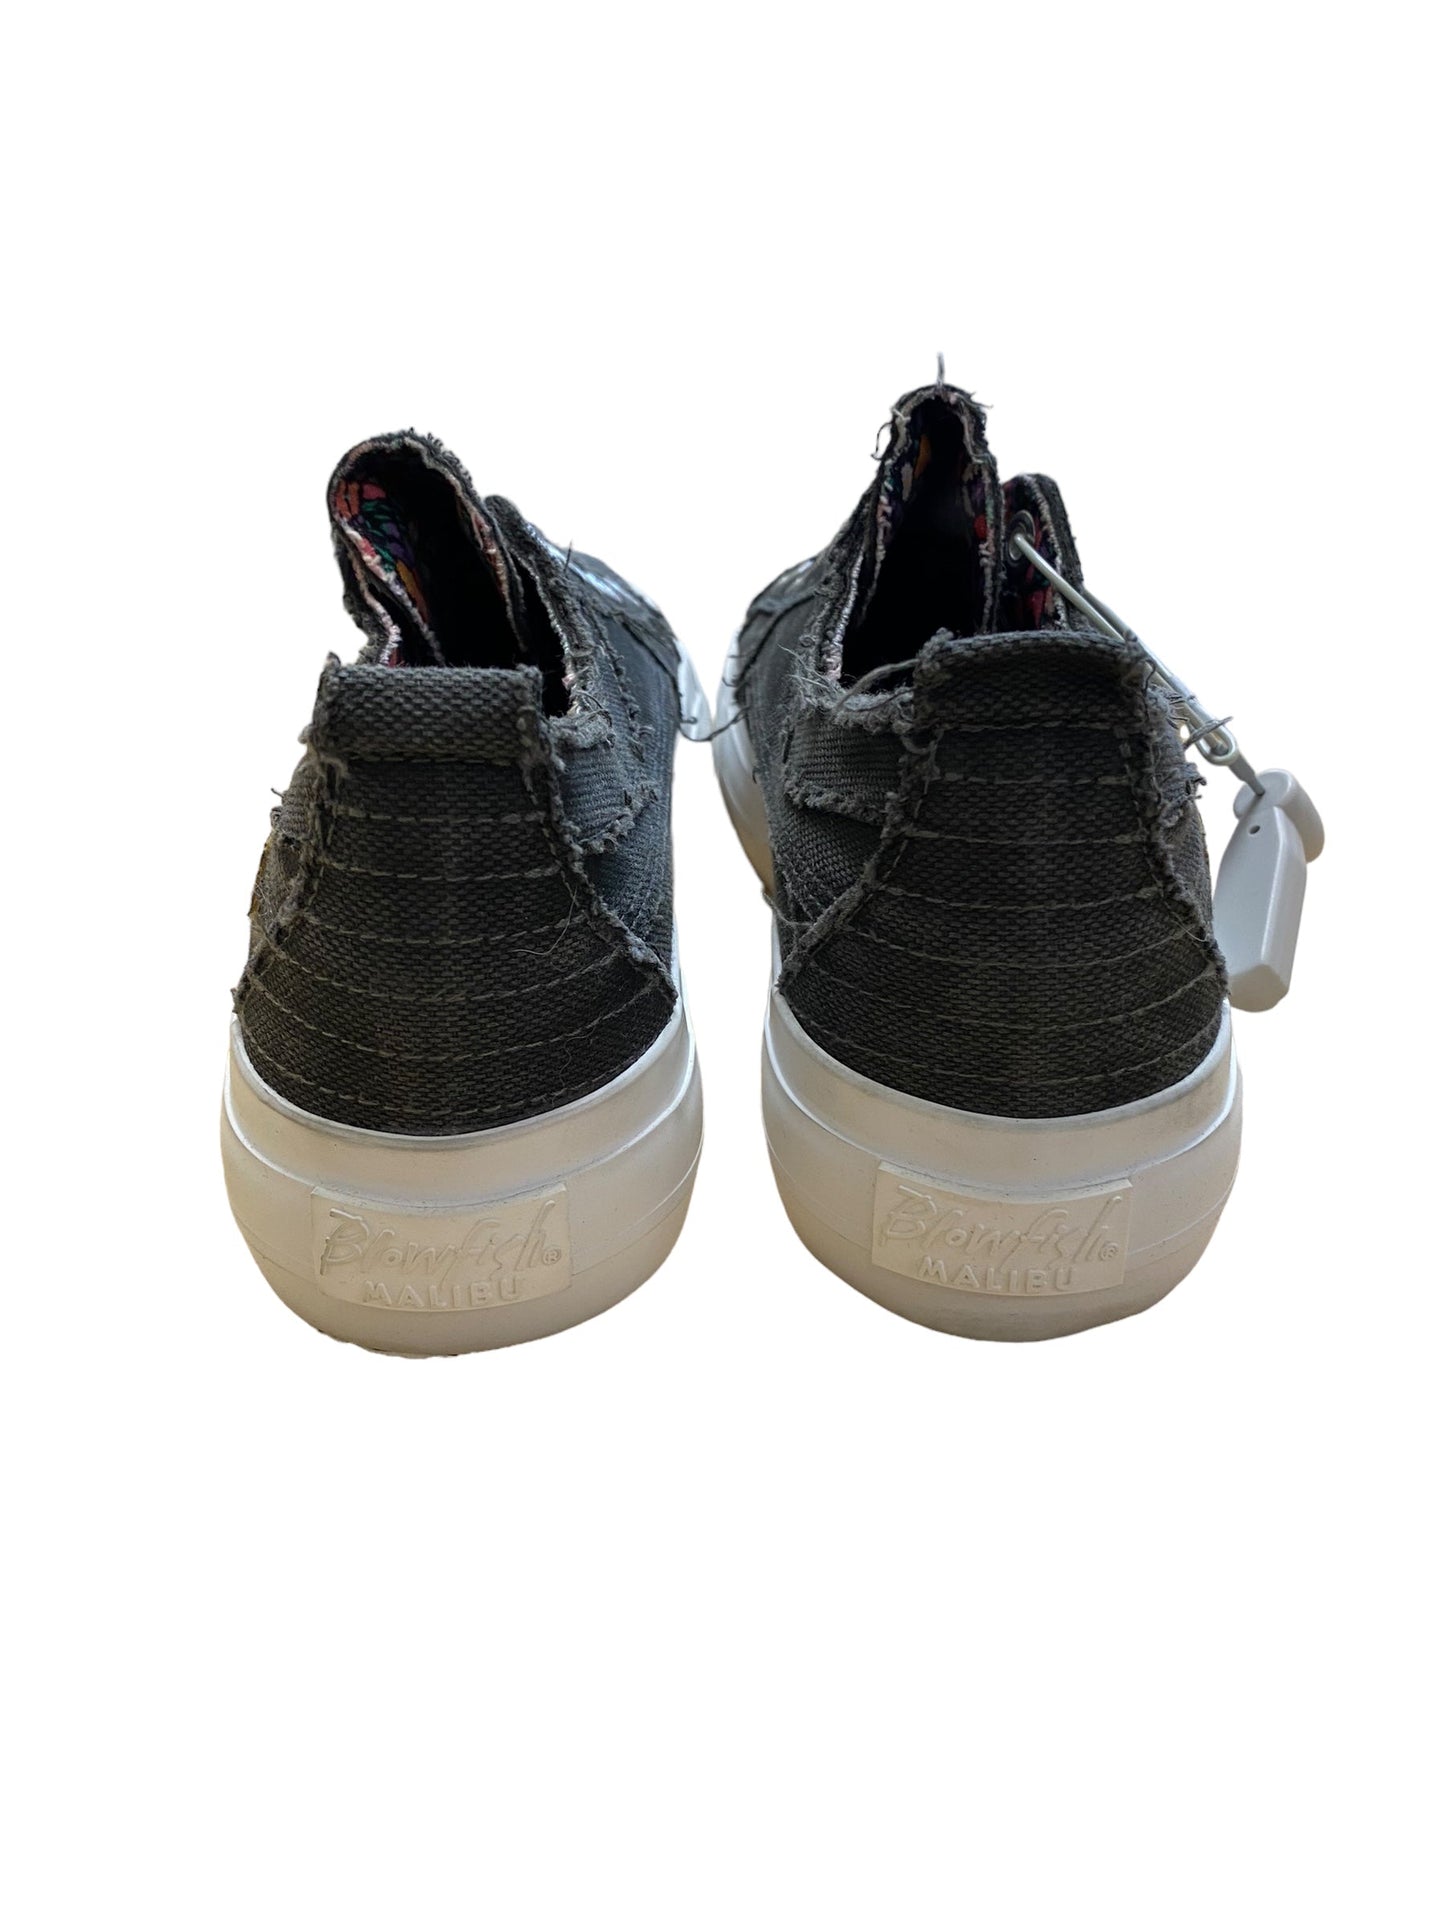 Grey Shoes Flats Blowfish, Size 9